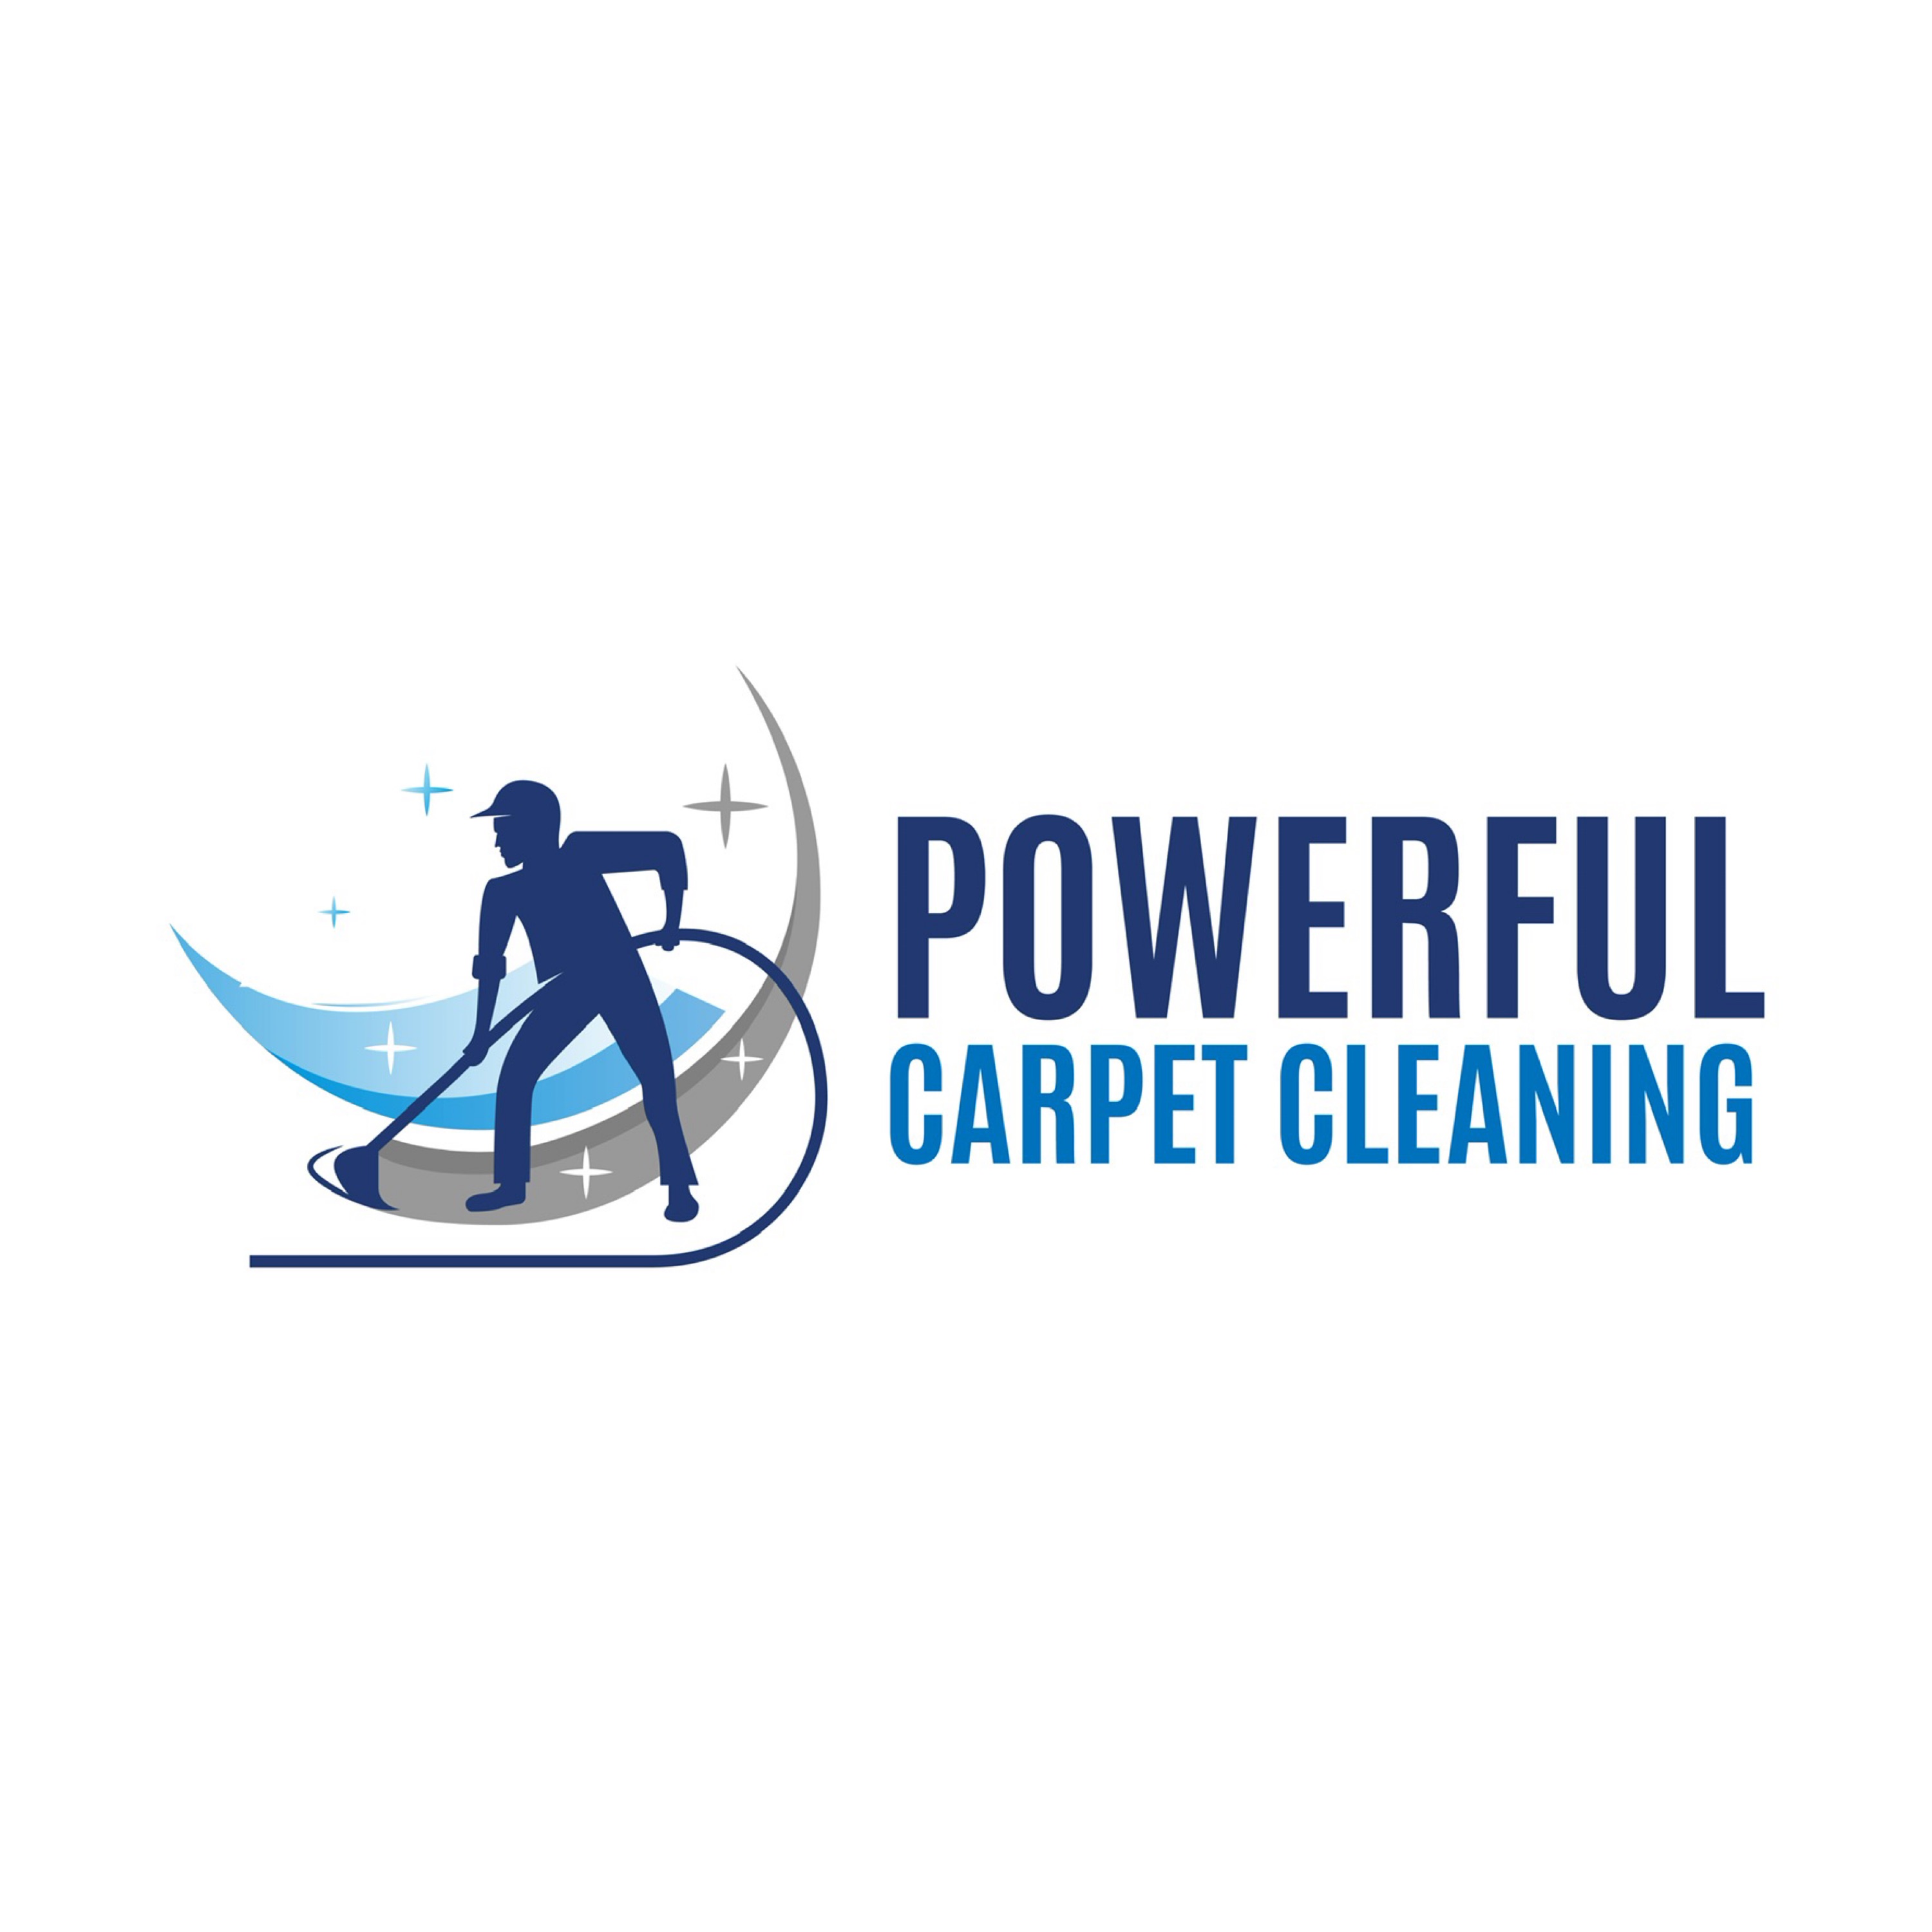 Powerful Carpet Cleaning Logo